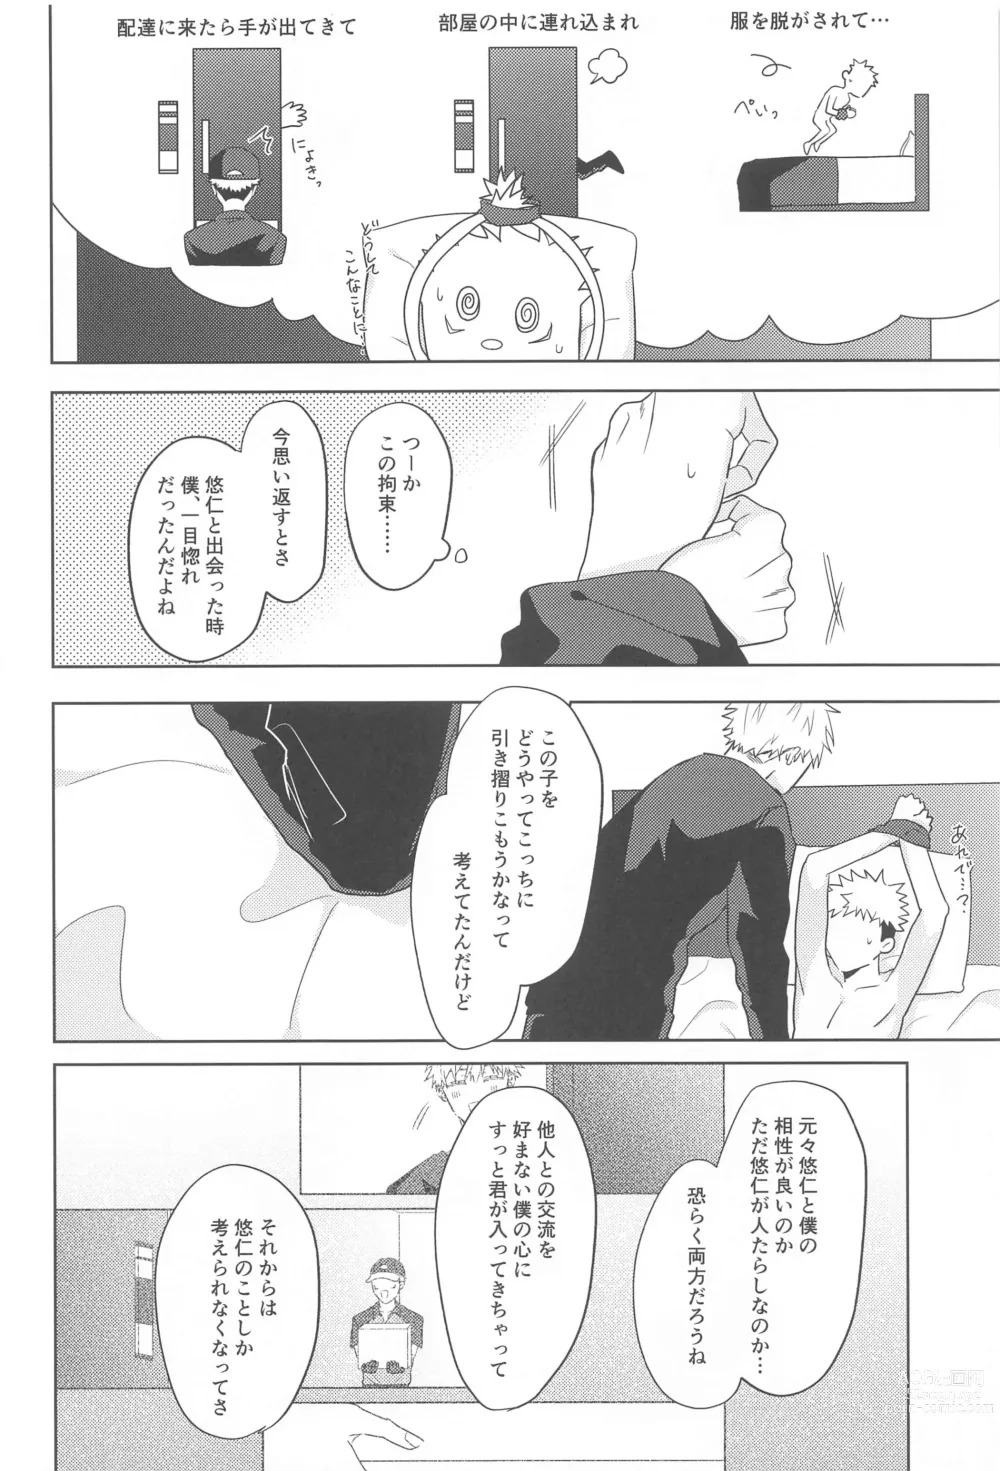 Page 23 of doujinshi Doushite Kounatta?!